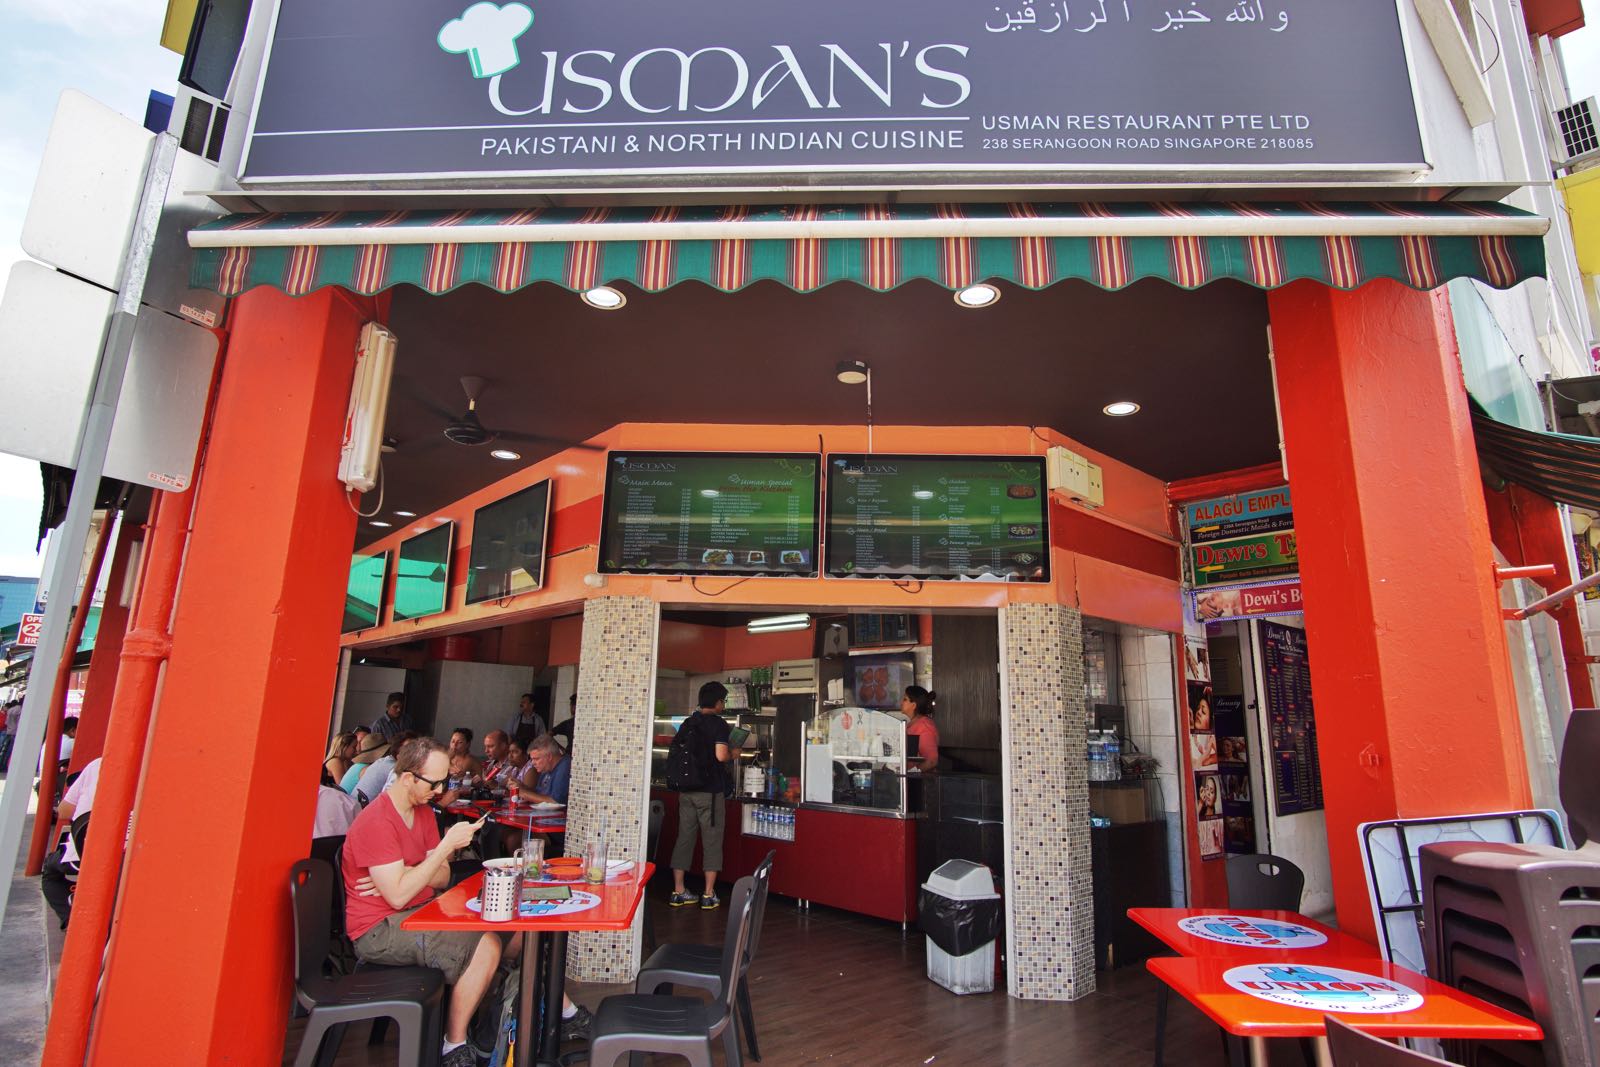 Usman Restaurant Little India Singapore Depan